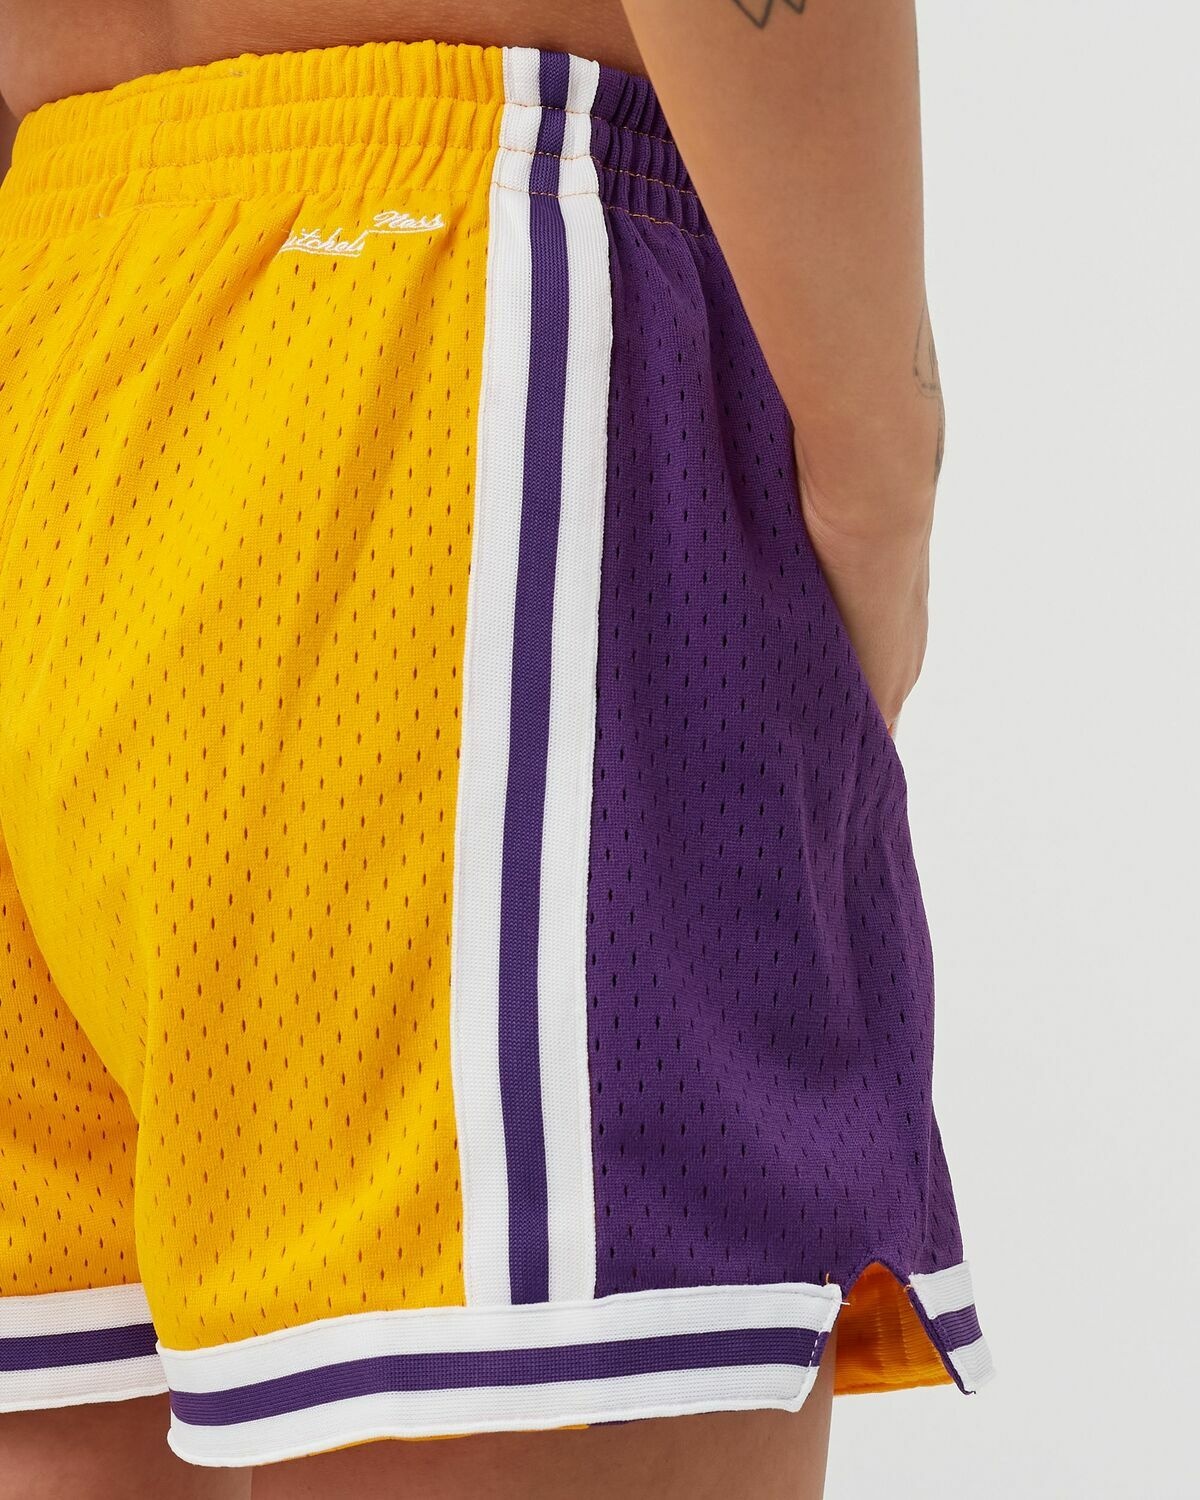 Mitchell & Ness Nba Jump Shot Shorts Los Angeles Lakers Yellow - Womens - Sport & Team Shorts